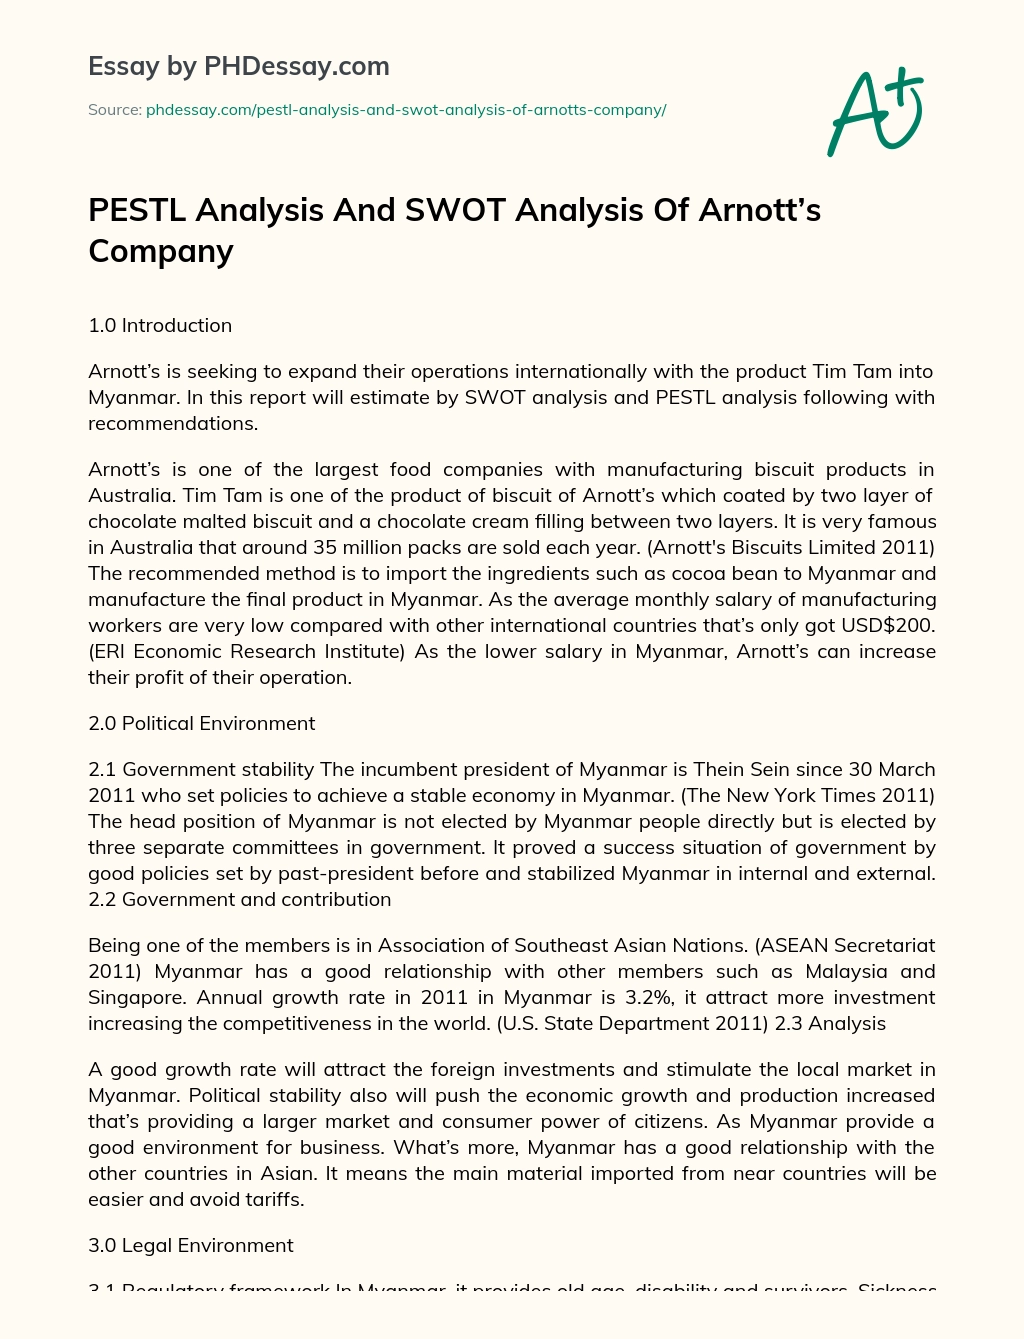 PESTL Analysis And SWOT Analysis Of Arnott’s Company essay